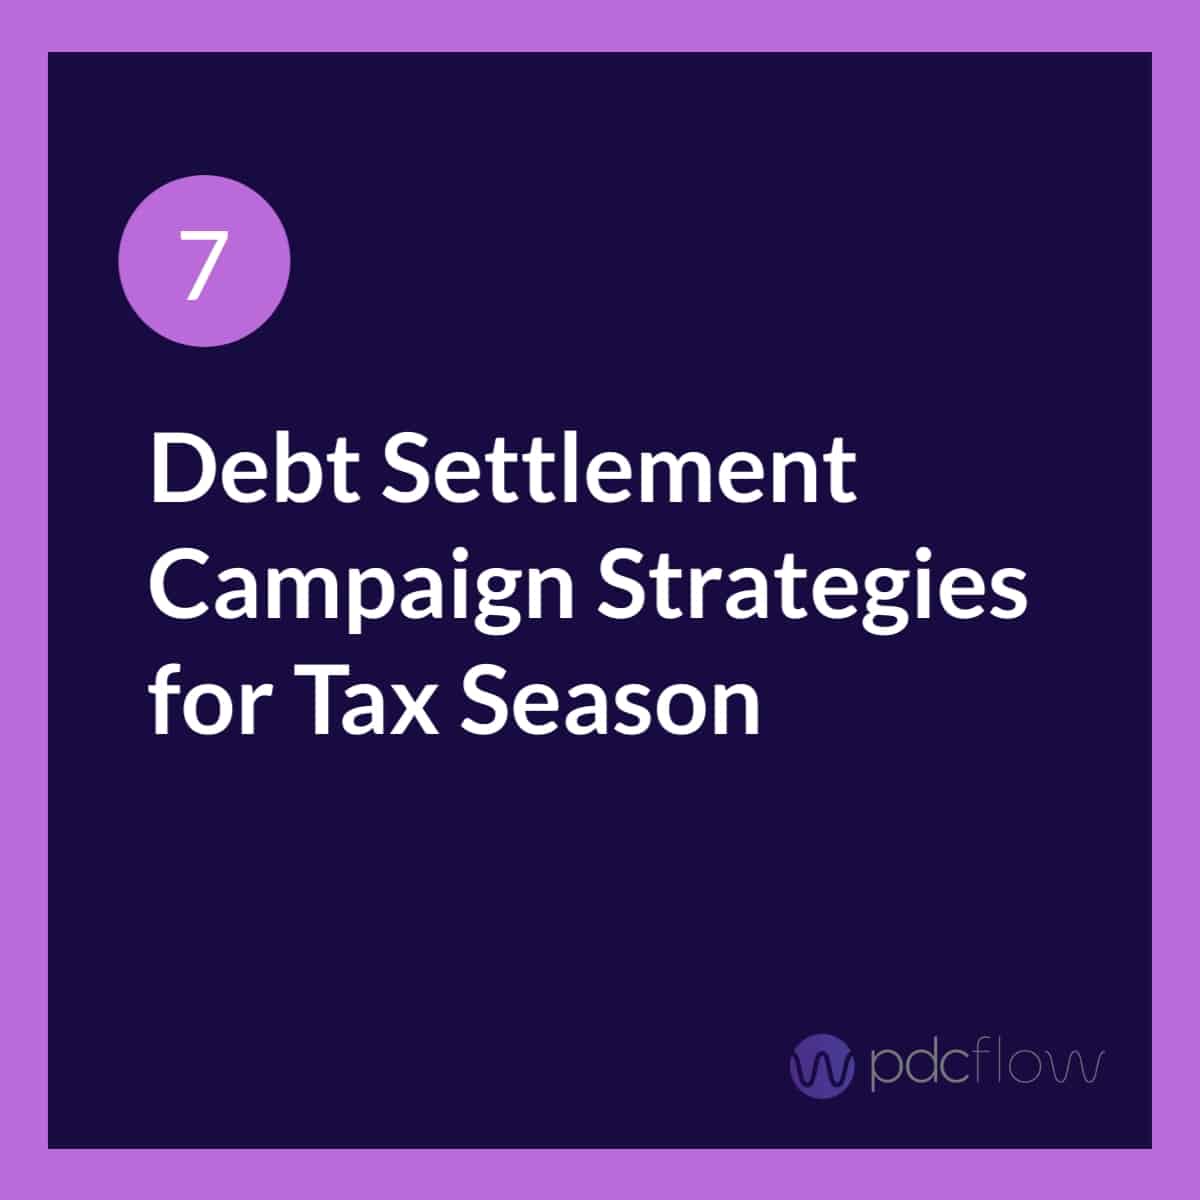 Debt Settlement Campaign Strategies for Tax Refund Season - Slide 1